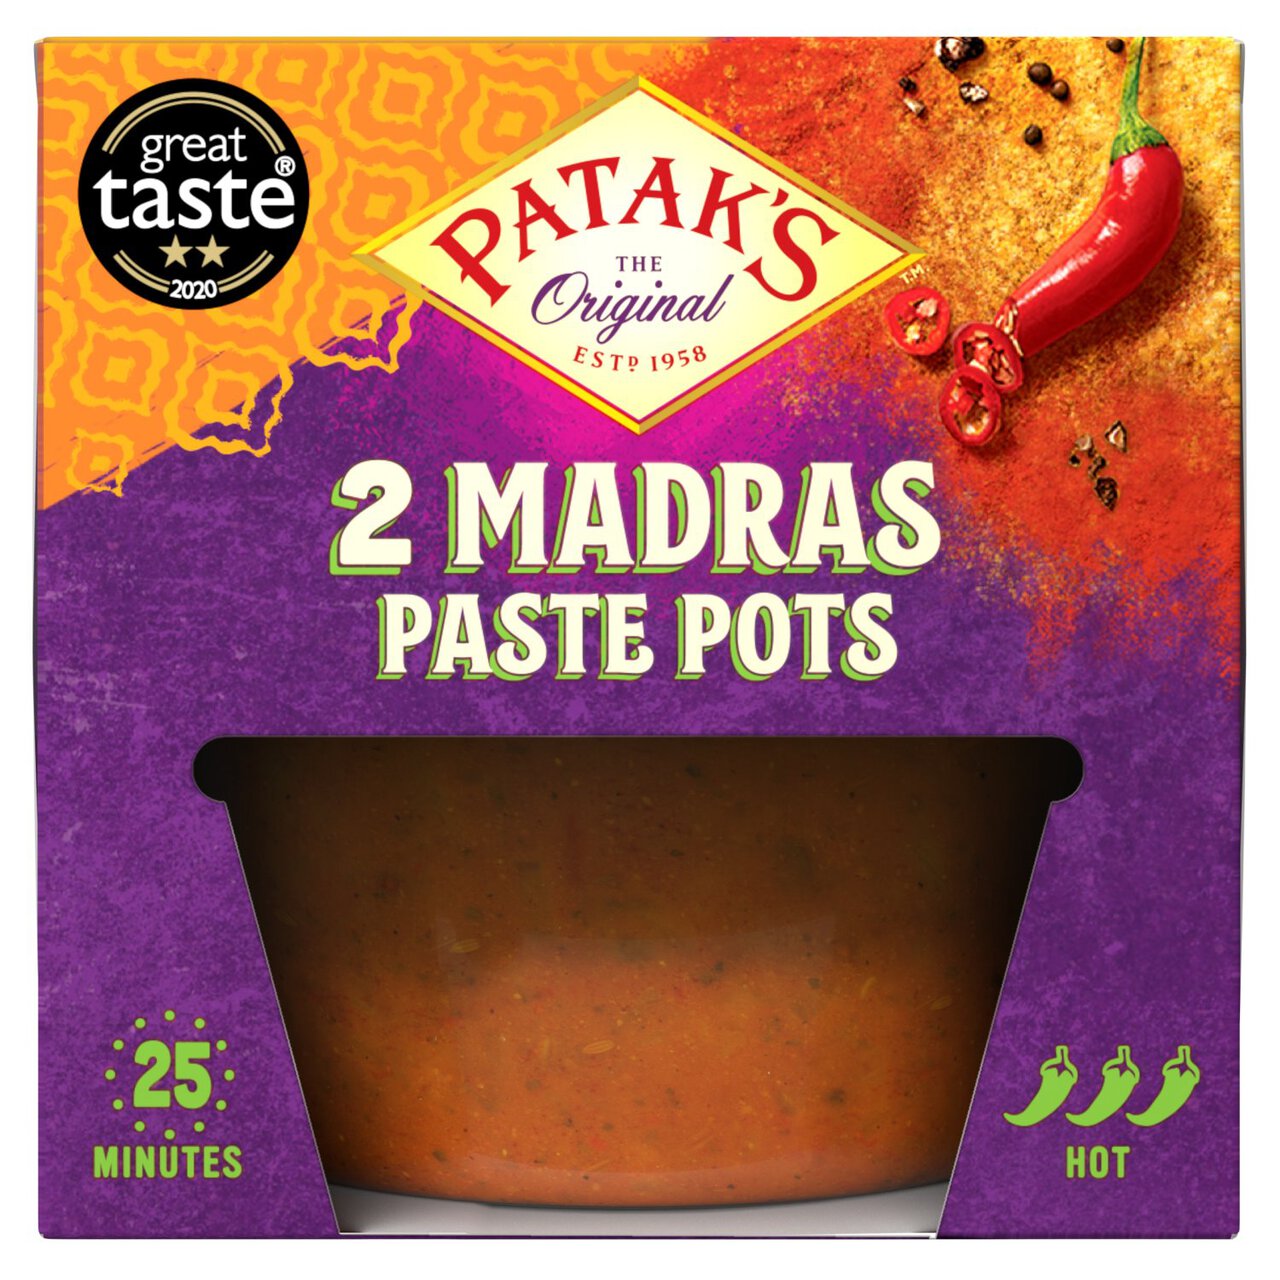 Patak's Madras Curry Paste Pot 2 x 70g